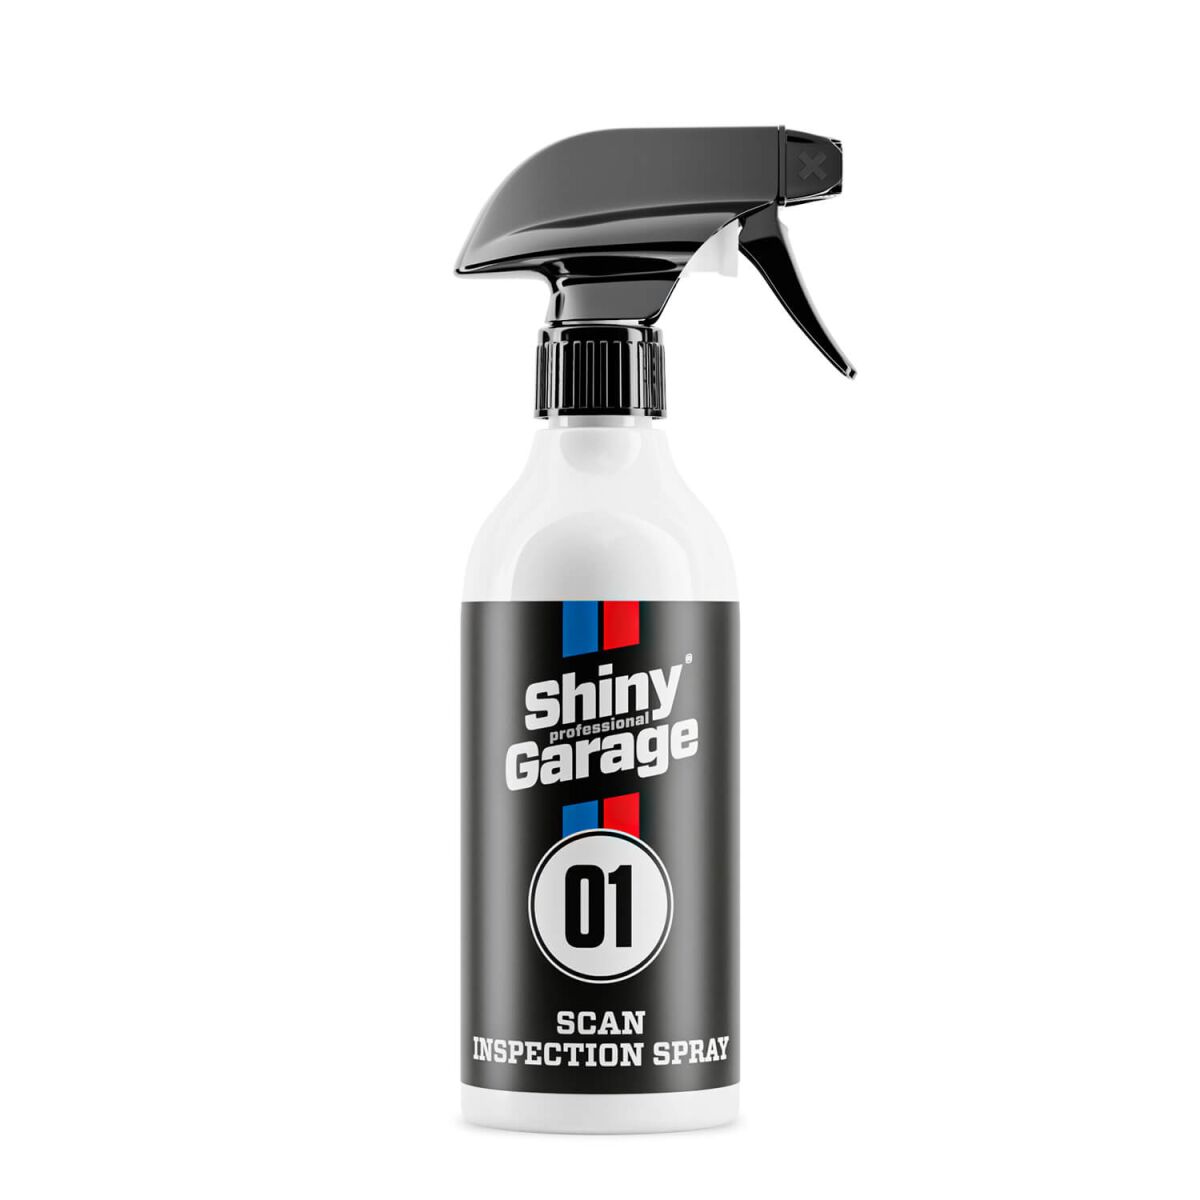 https://www.waschguru.de/media/image/product/12683/lg/shiny-garage-scan-inspection-spray-lackreiniger-500ml.jpg